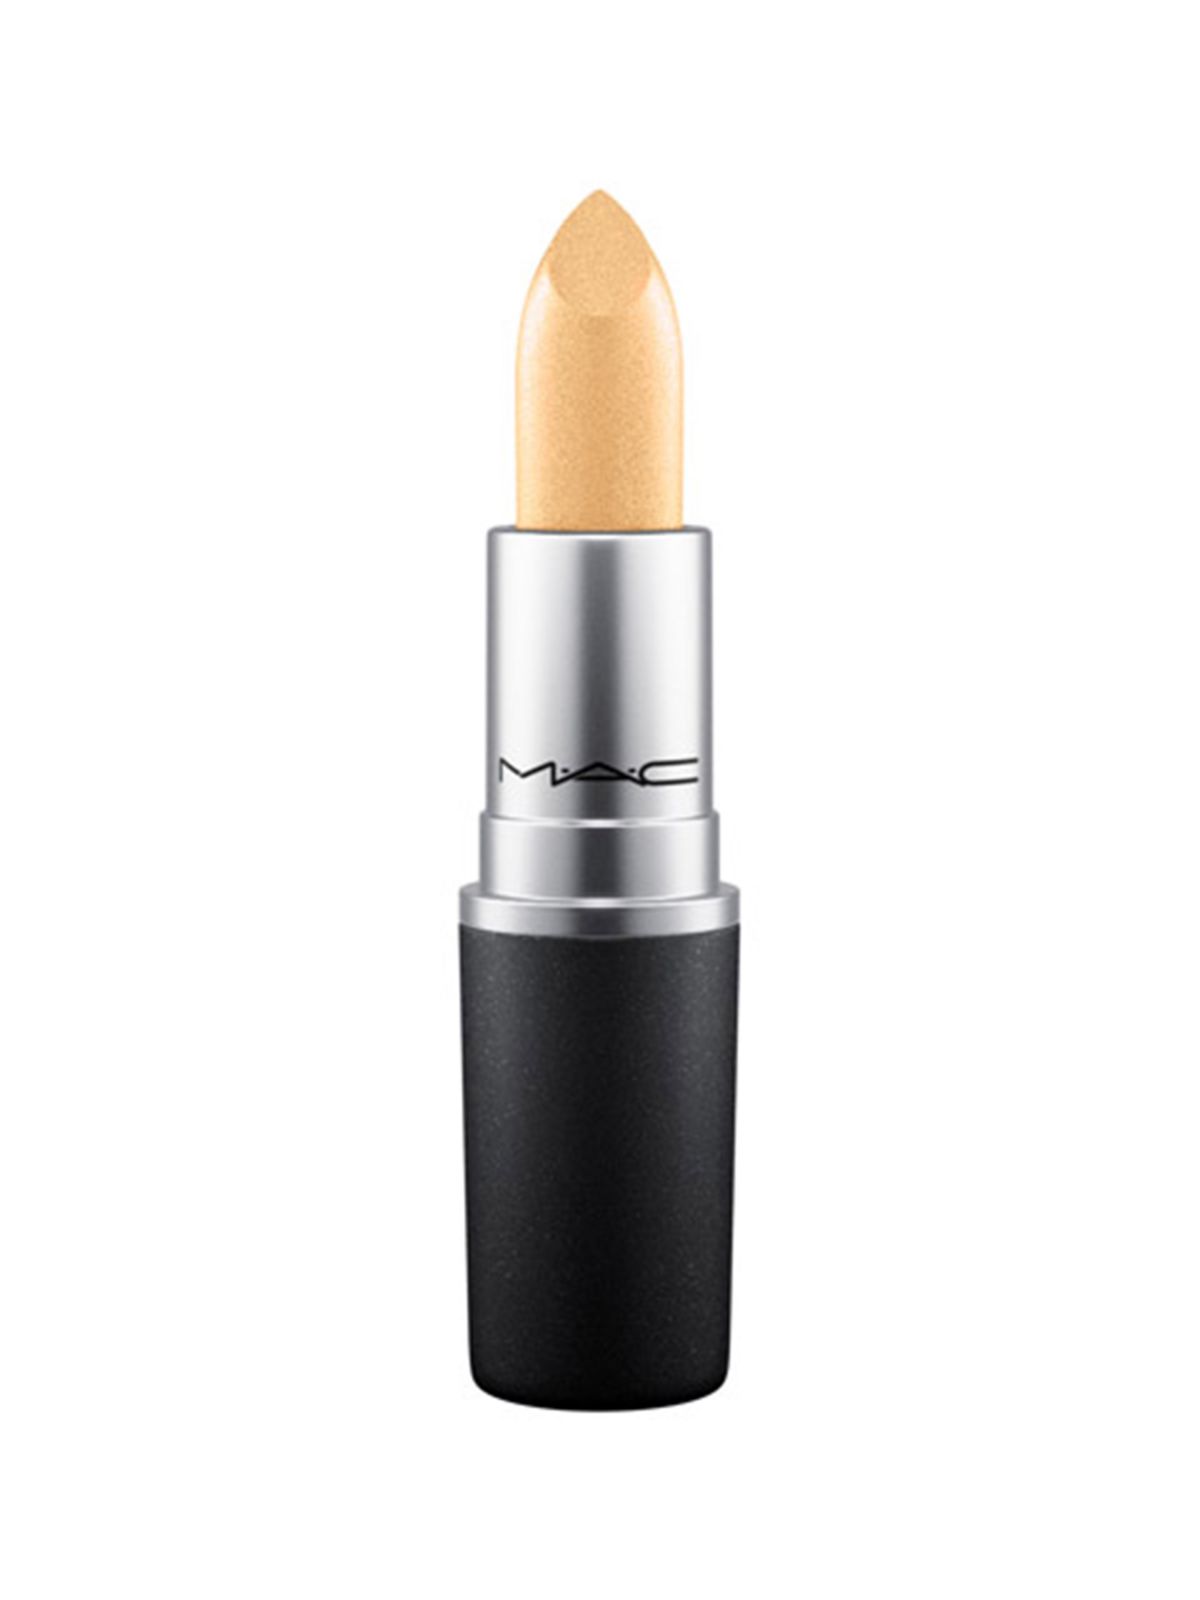  שפתון Frost Lipstick של MAC